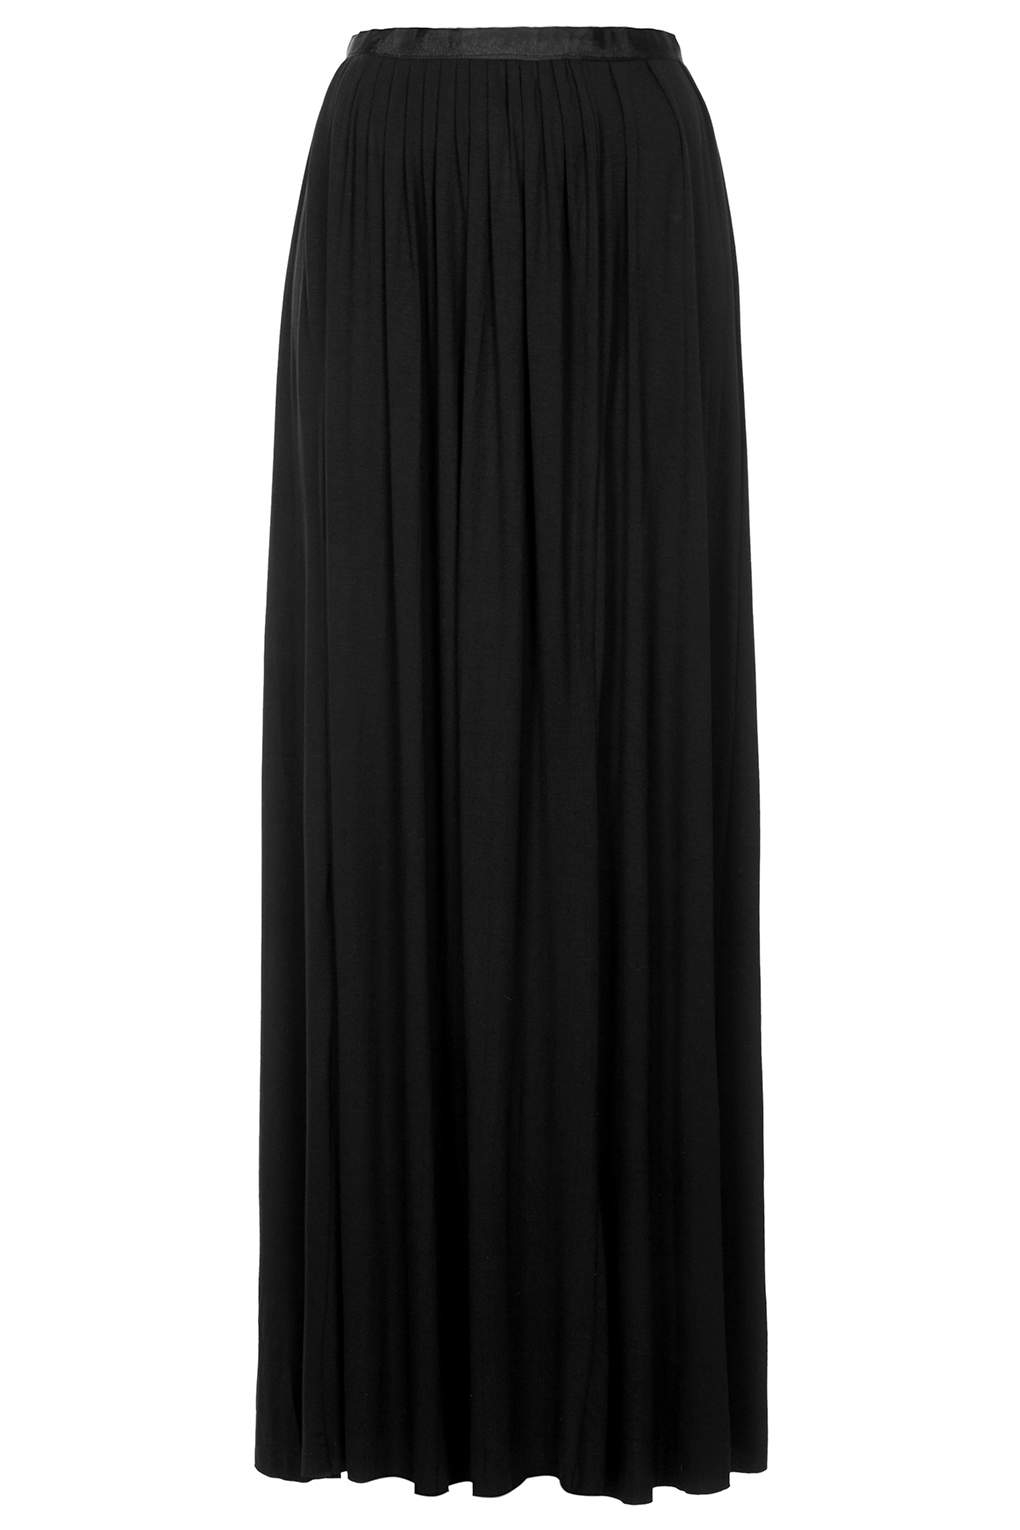 TOPSHOP Black Jersey Pleat Maxi Skirt - Lyst